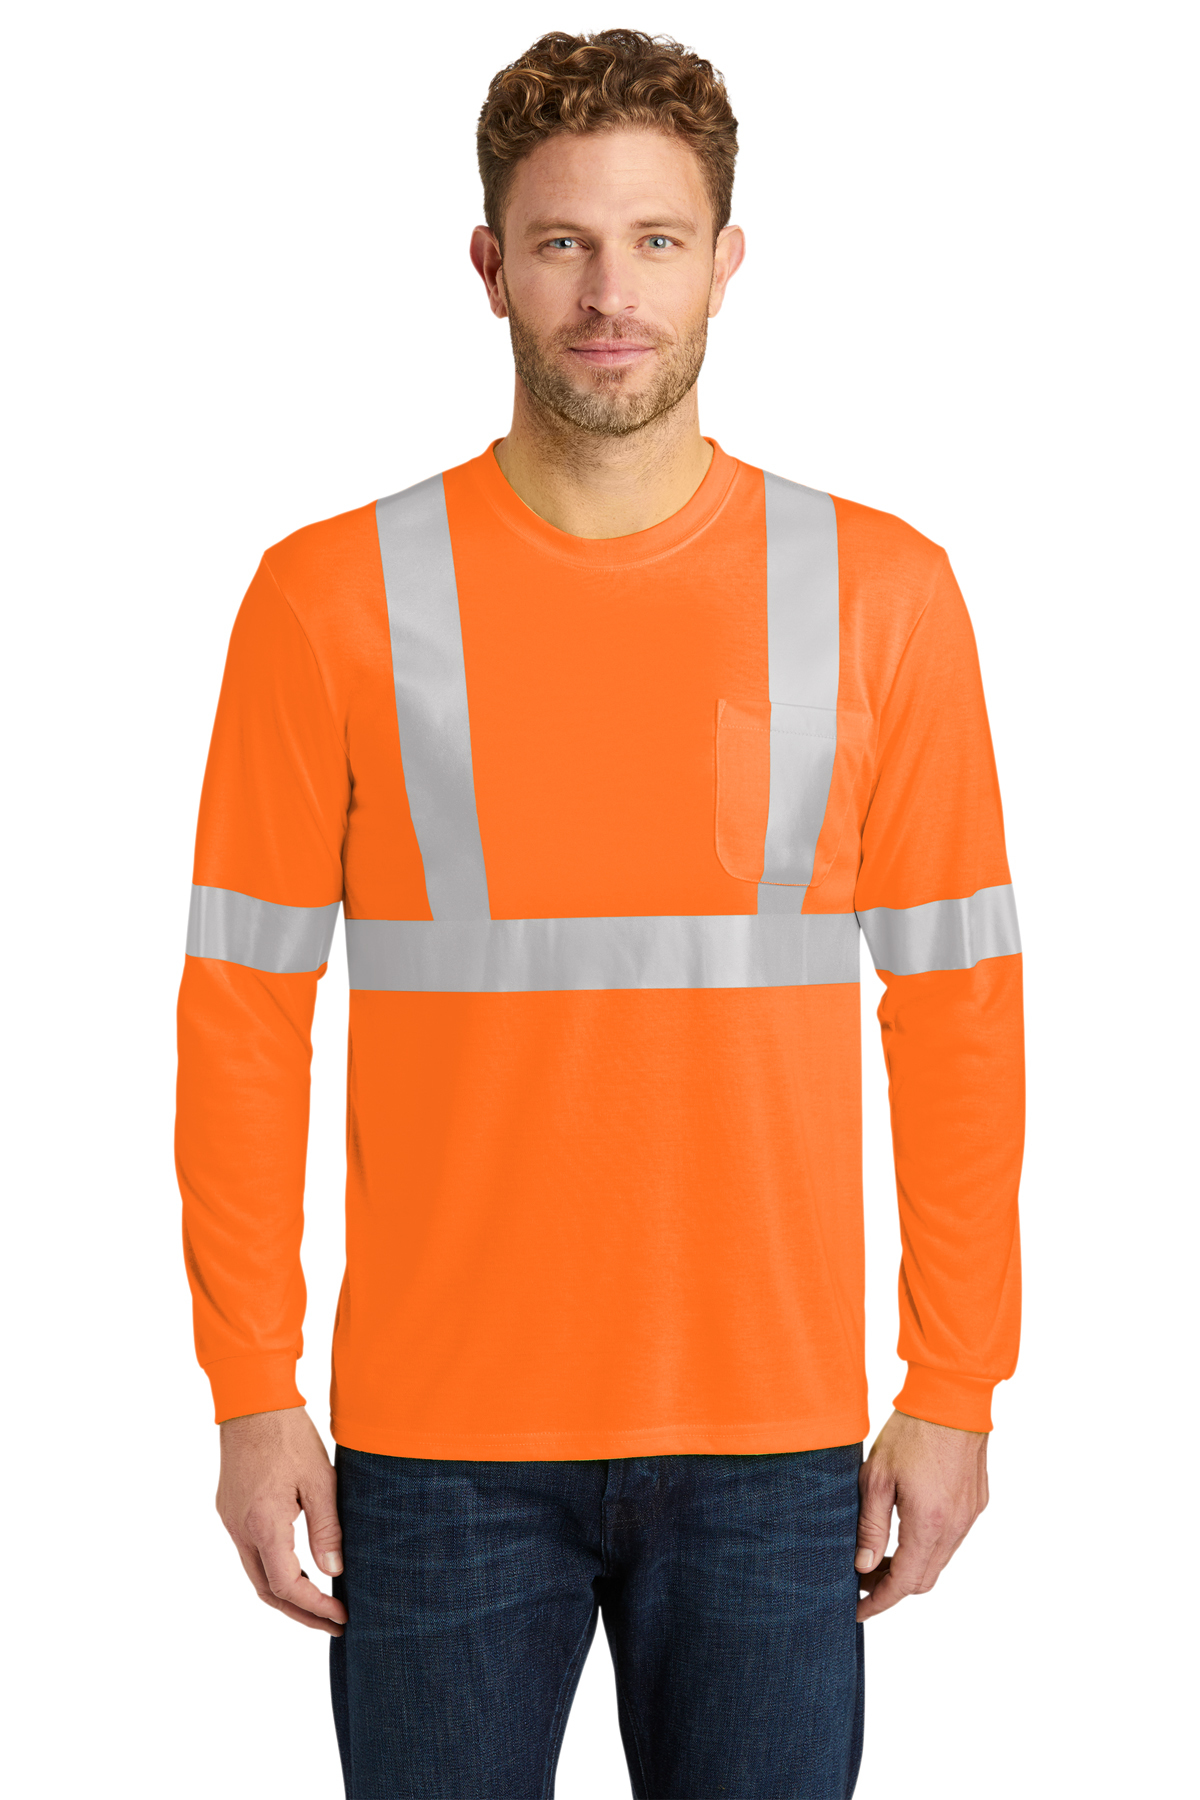 CornerStone ANSI 2 Sleeve Safety T-Shirt | Product |